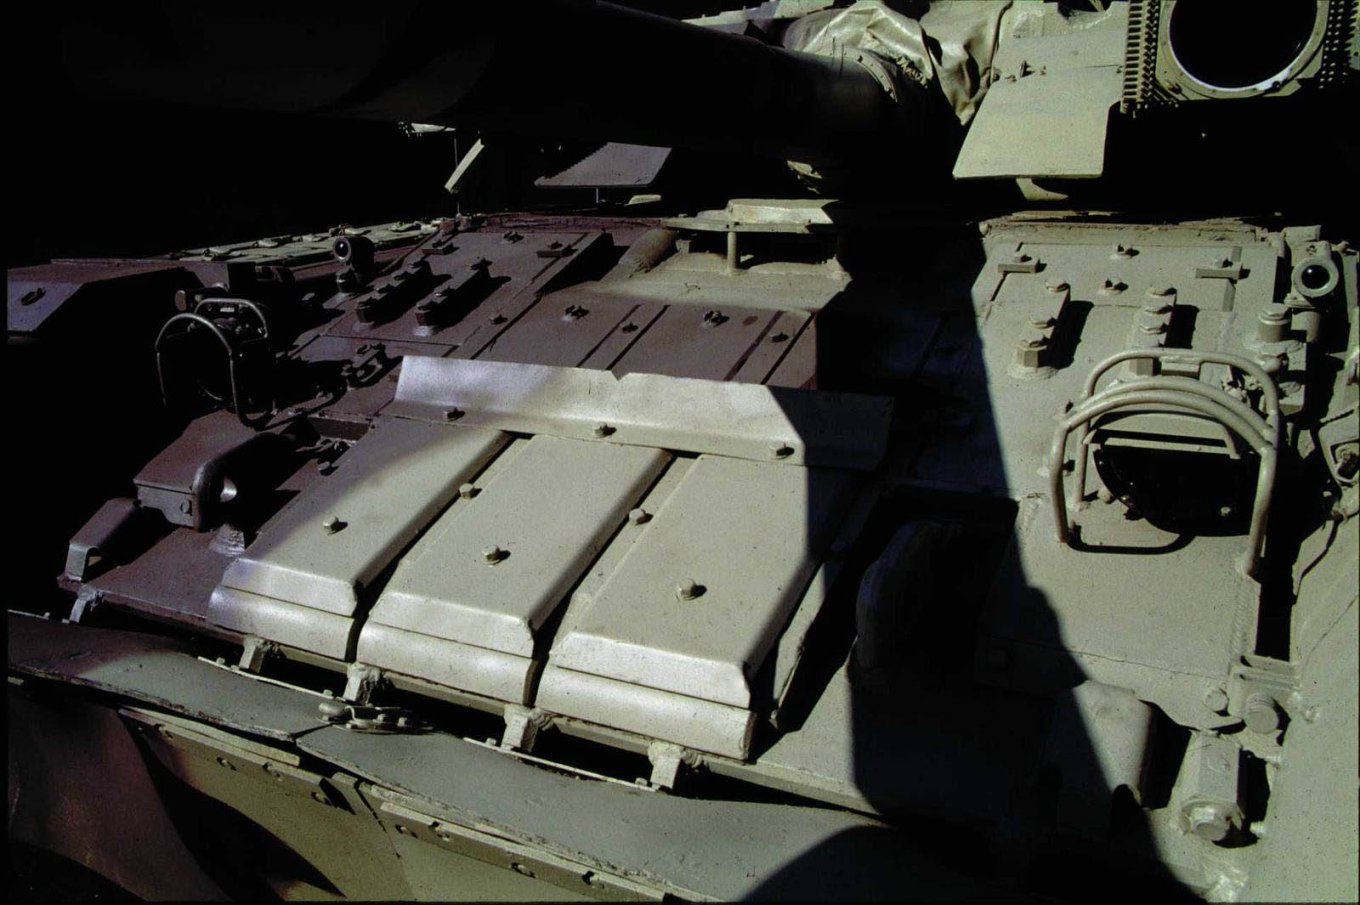 Defense Express, T-80UD MBT, Ukraine to Repair Tanks for Pakistan